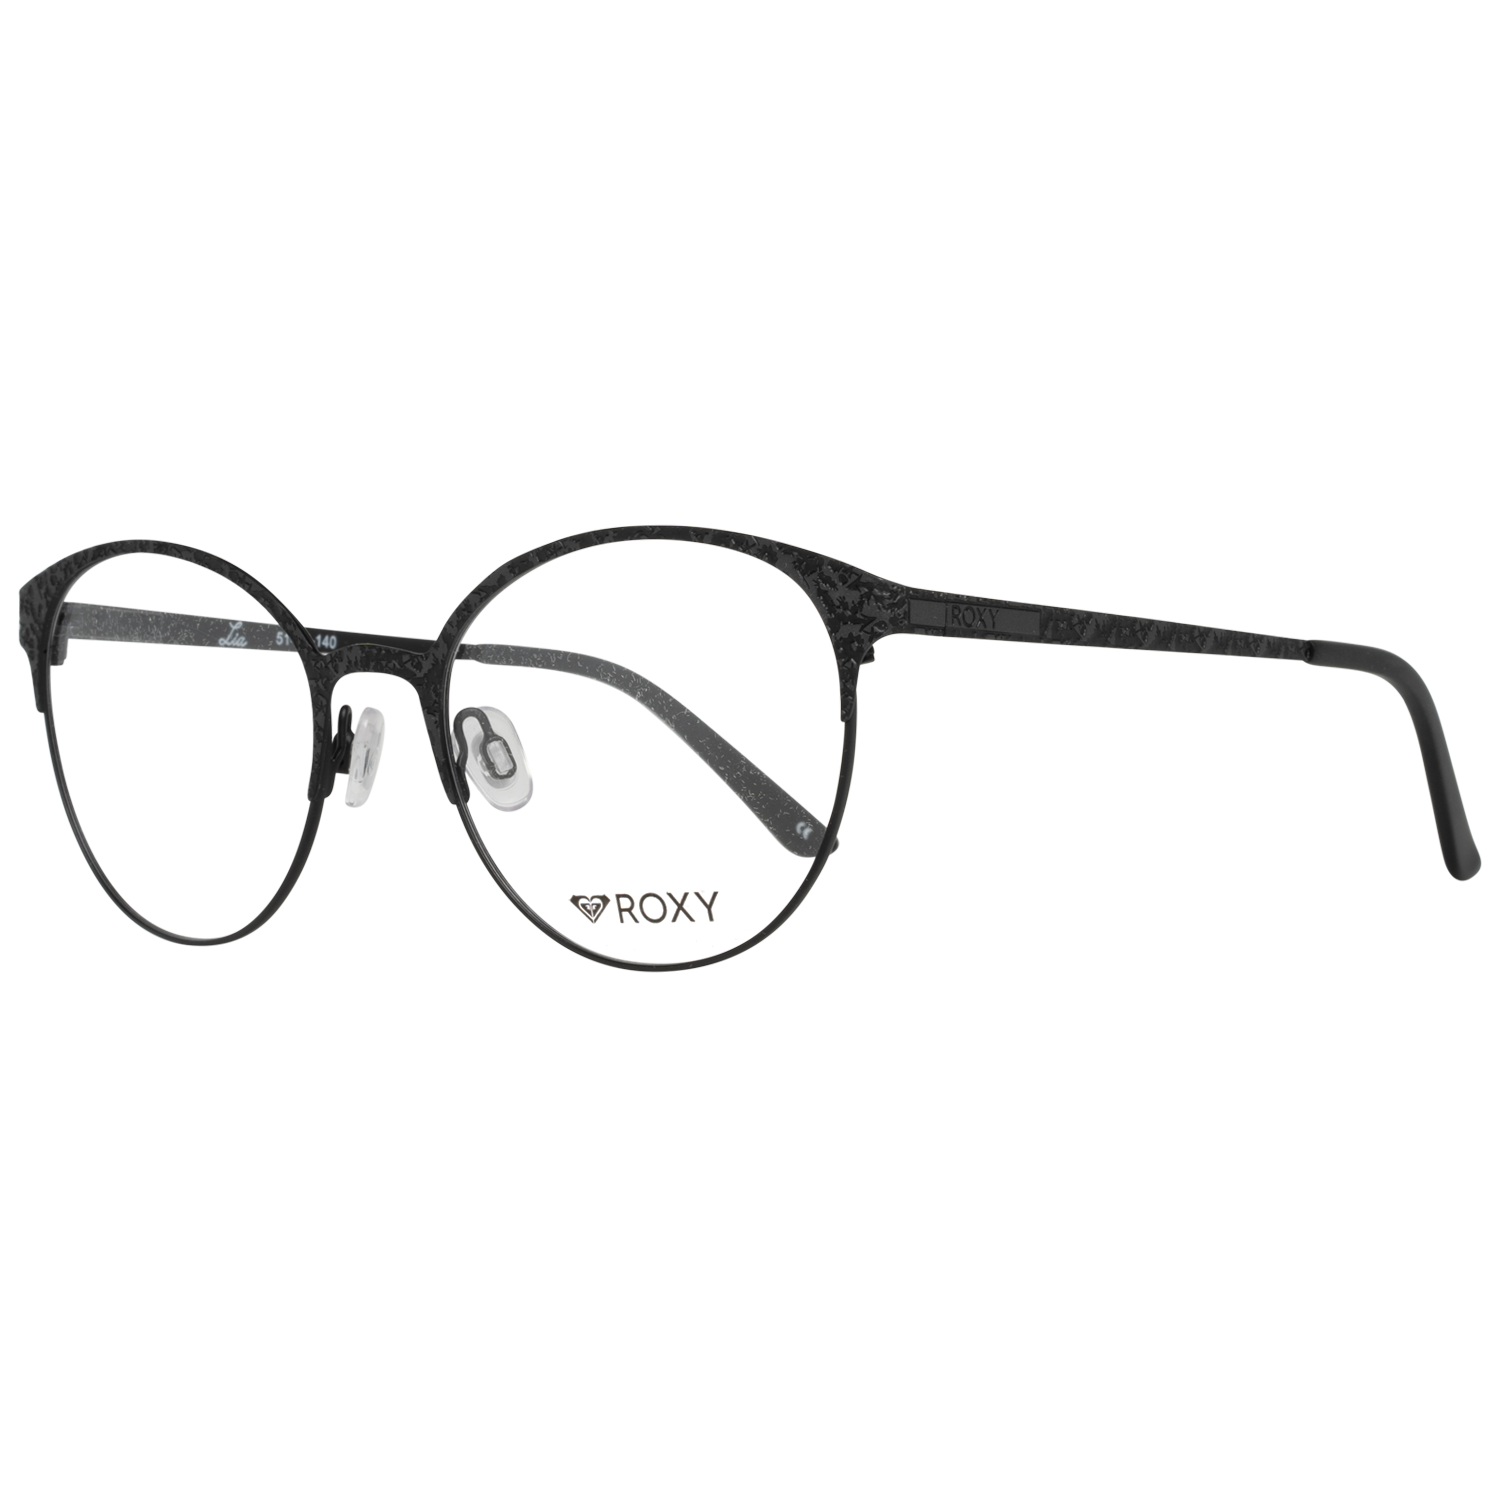 Roxy Frames Roxy Glasses Optical Frame ERJEG03042 DBLK 51 Eyeglasses Eyewear UK USA Australia 